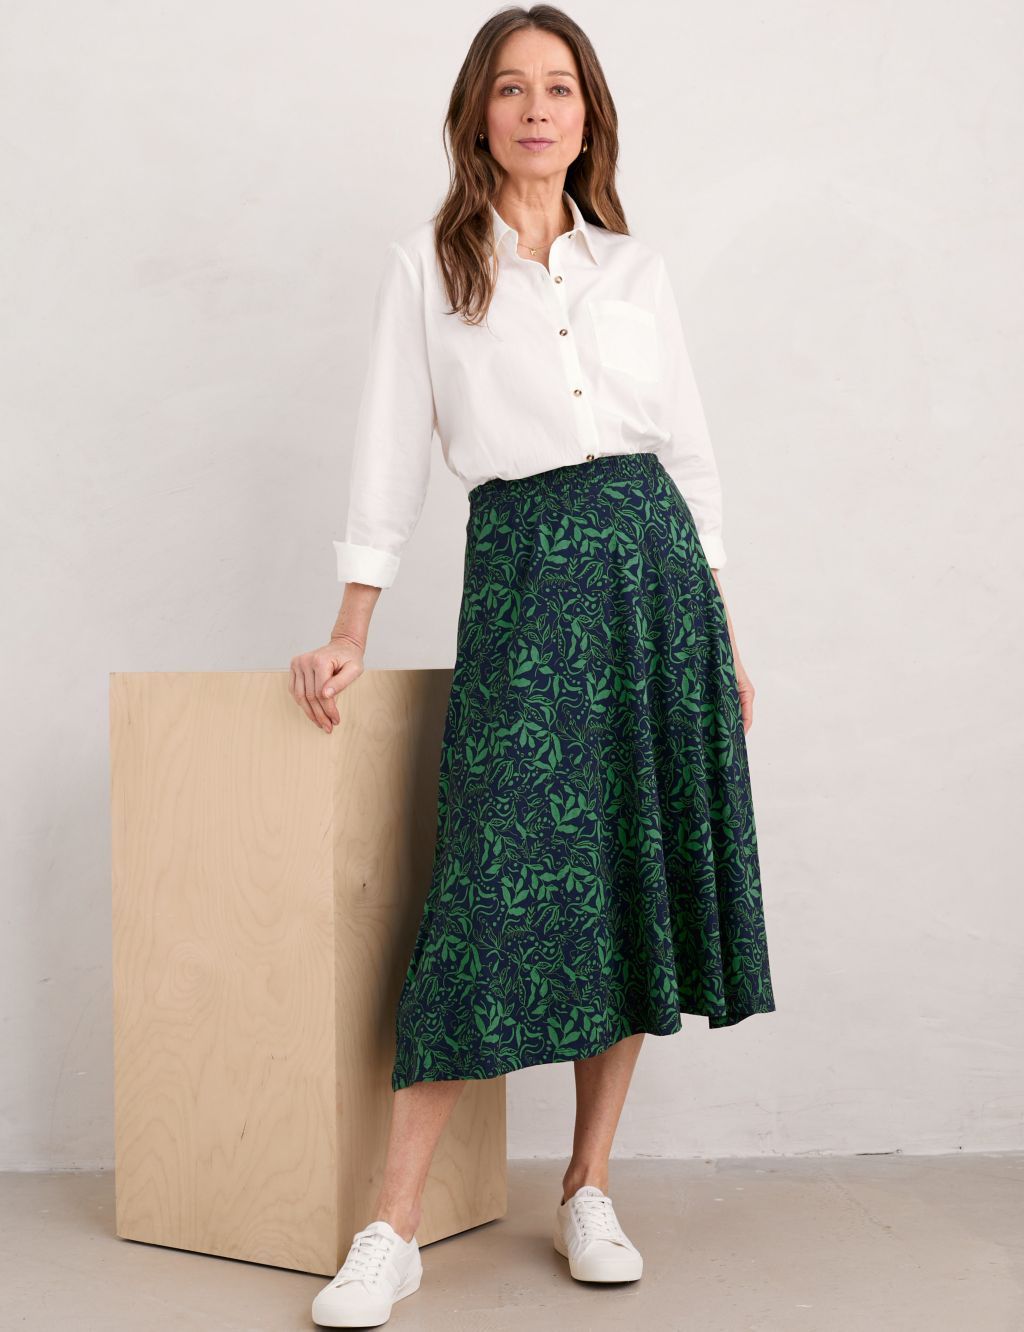 Floral Midi A-Line Skirt